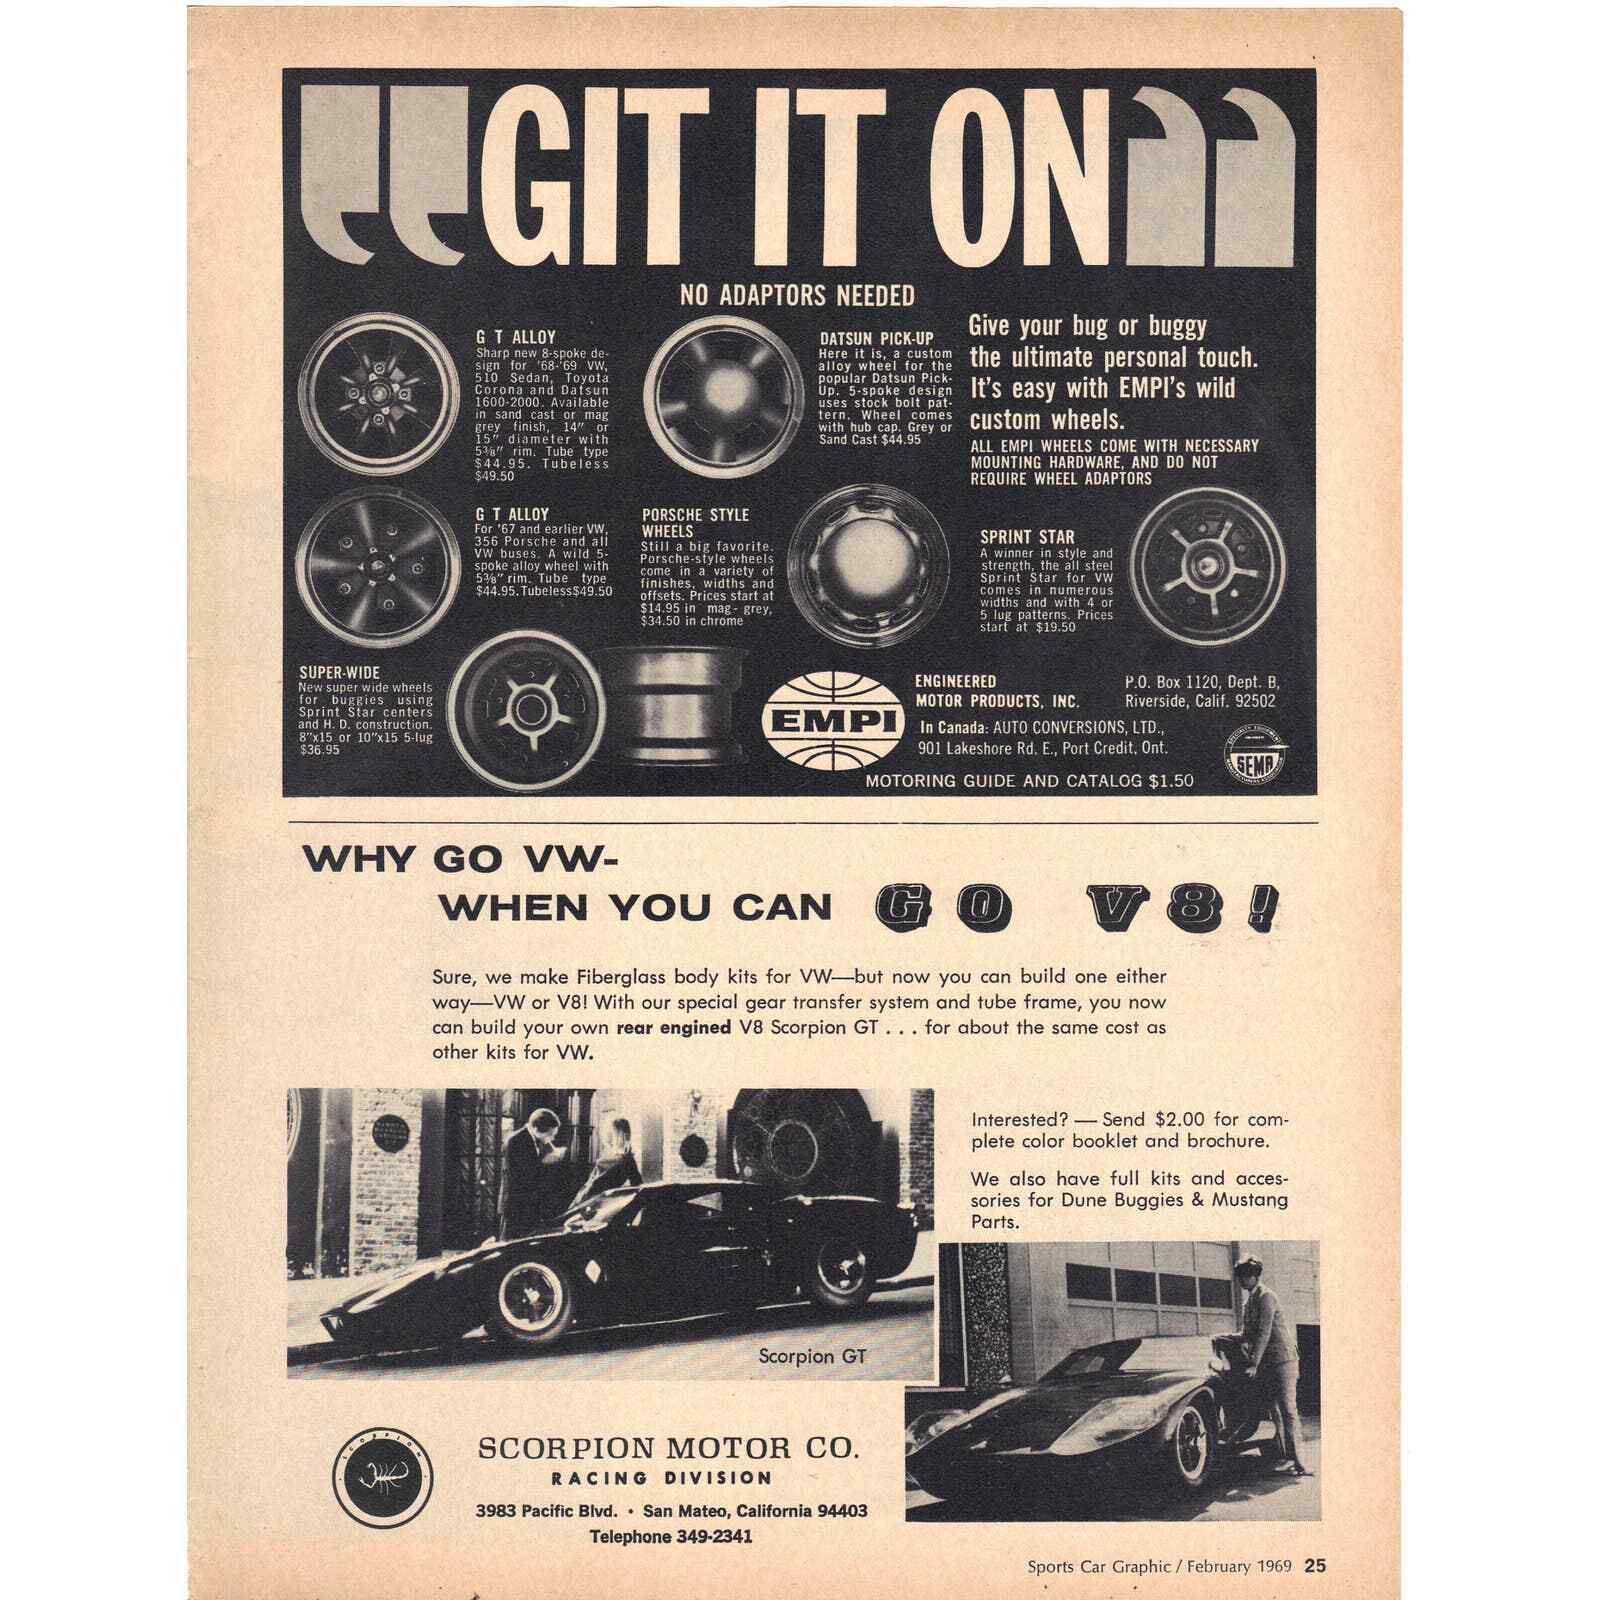 Vintage 1969 Print Ad for Scorpion Motor Company